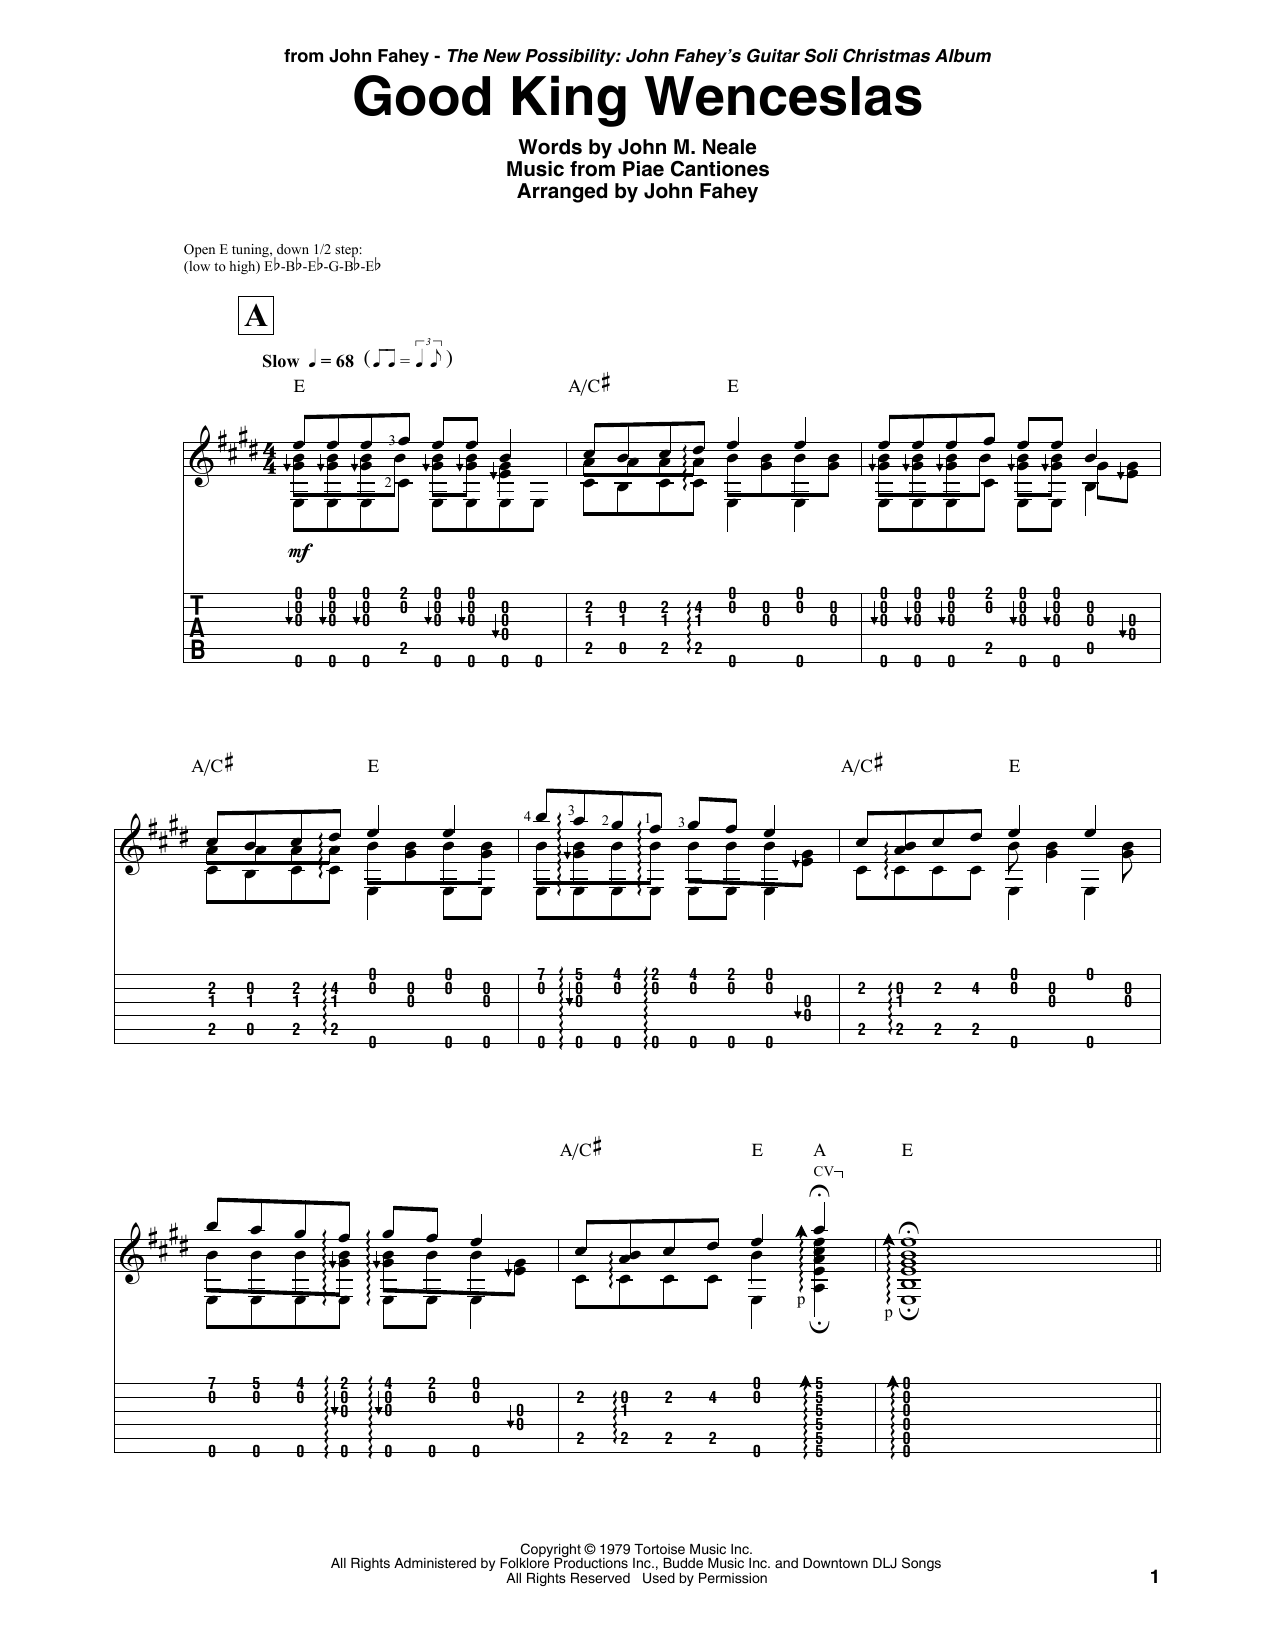 John Fahey Good King Wenceslas Sheet Music Notes & Chords for Guitar Tab - Download or Print PDF